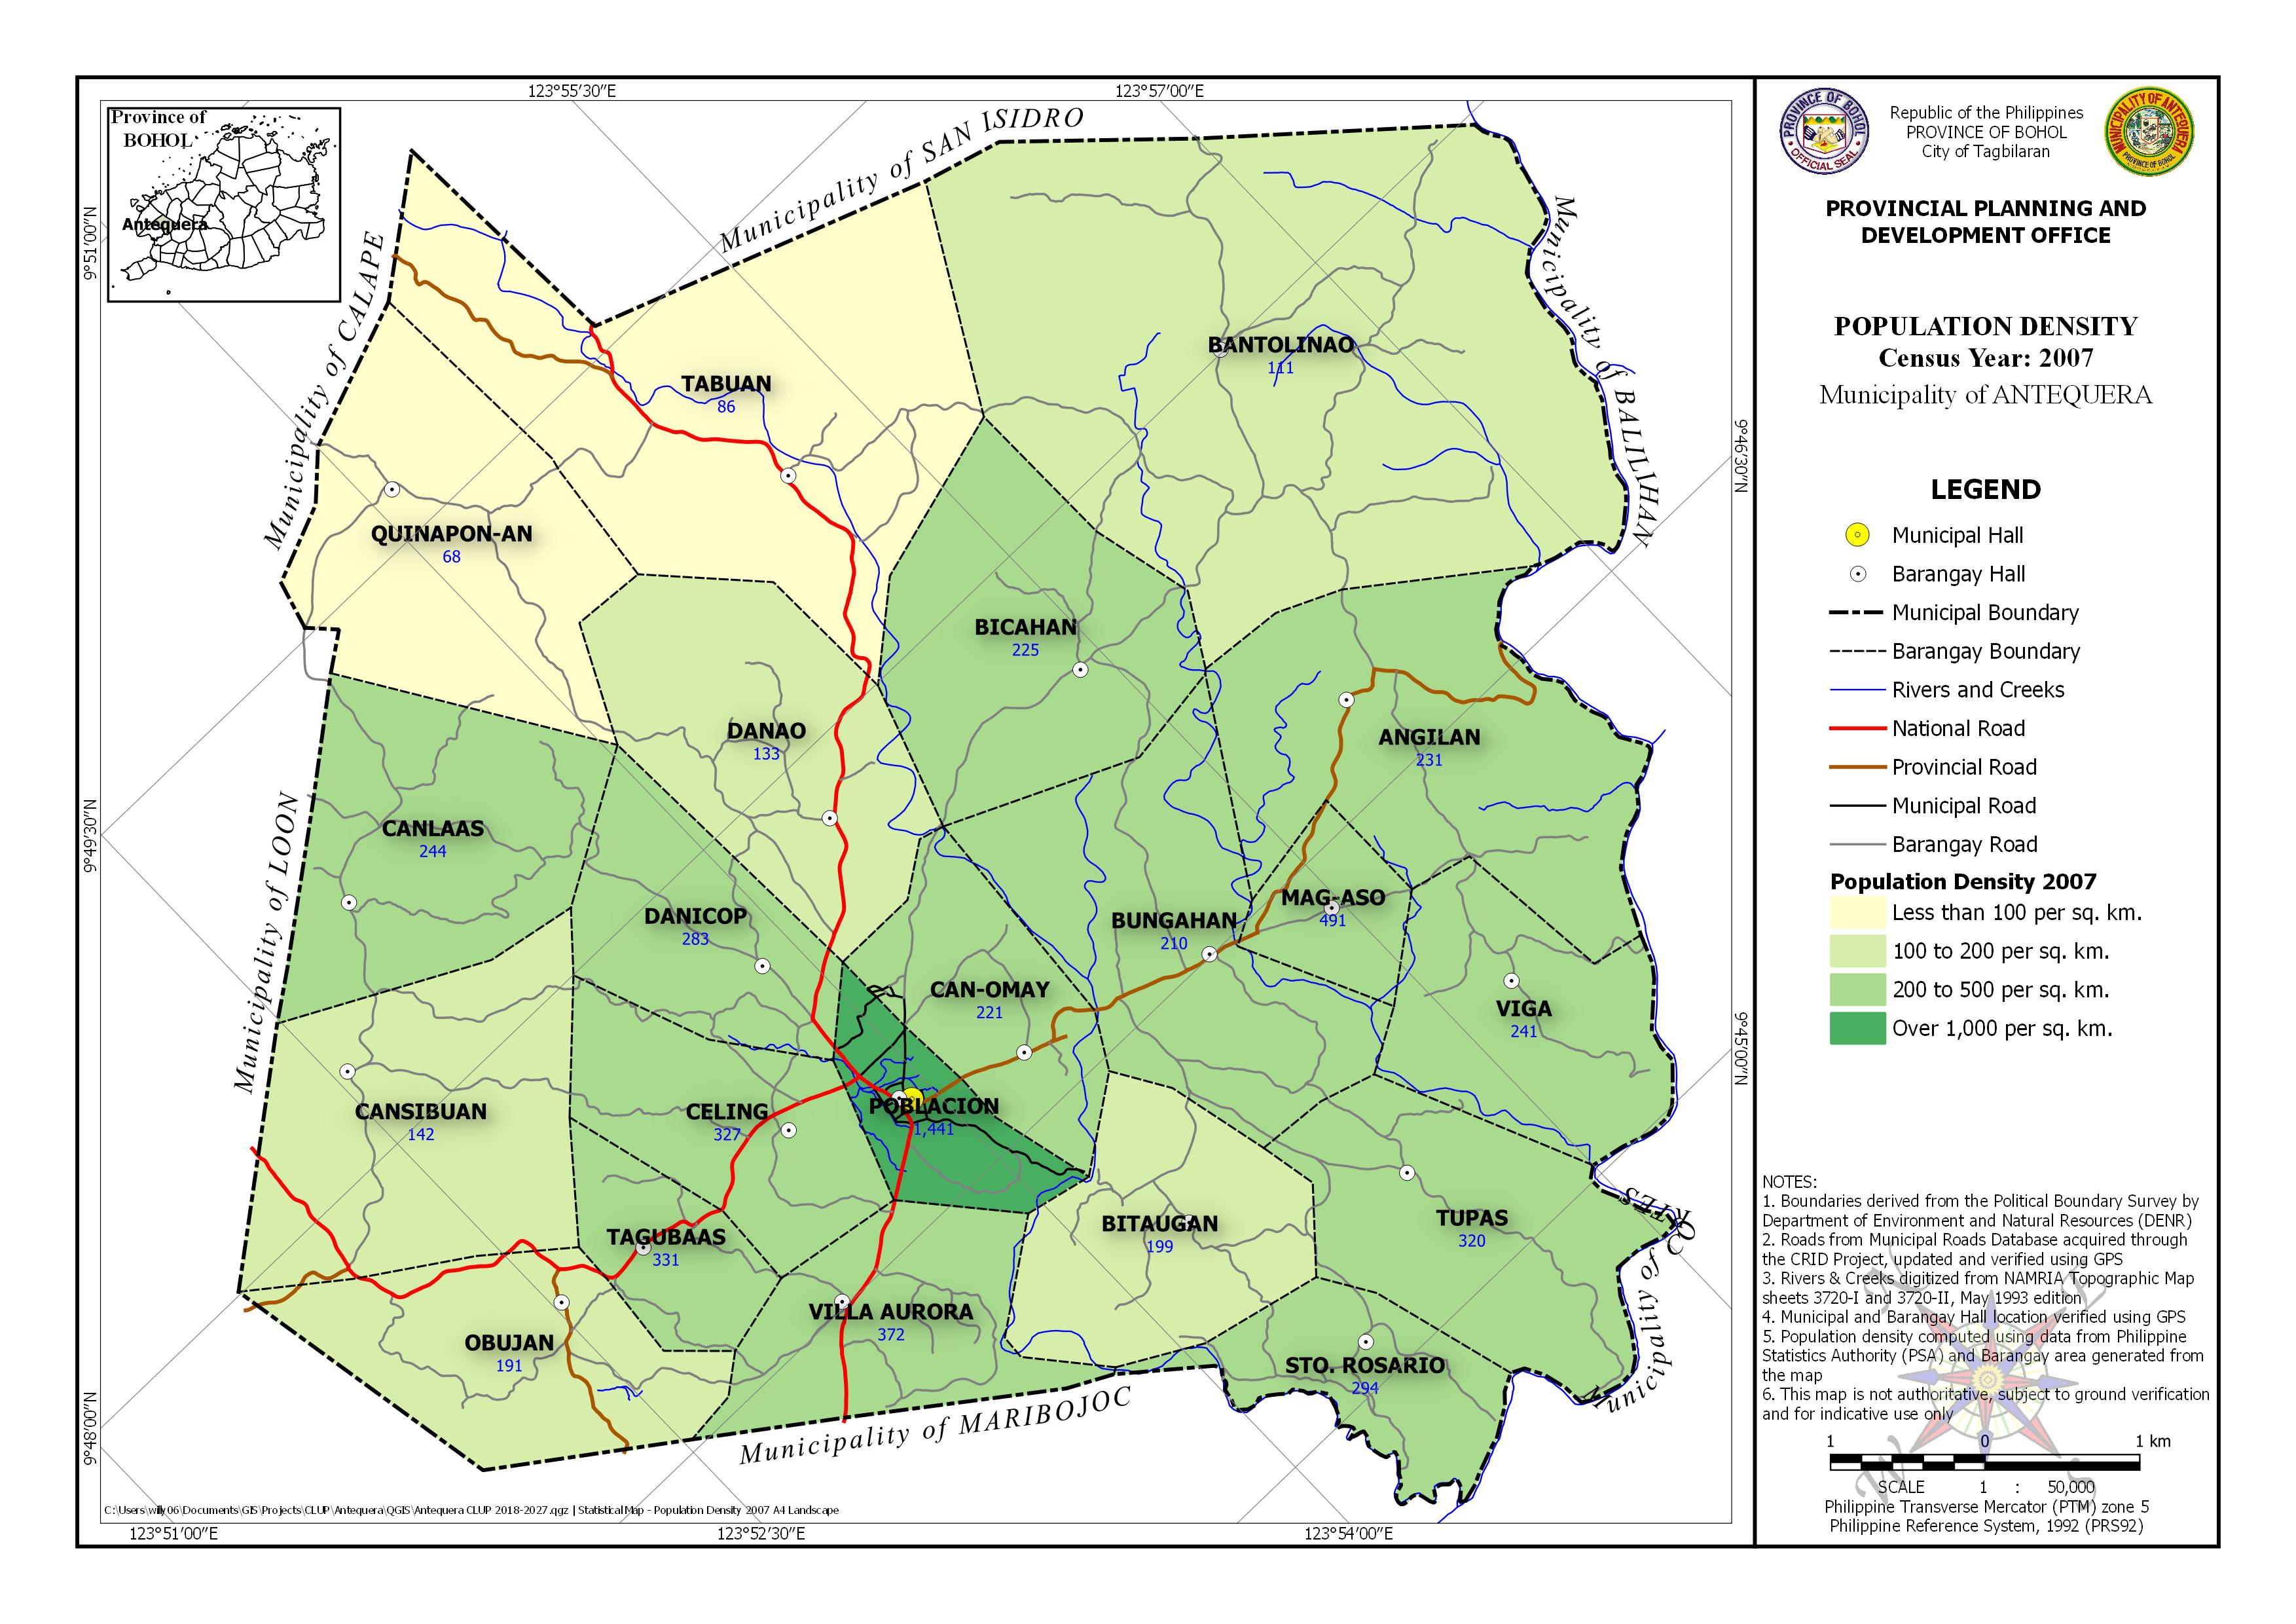 Population Density Census Year: 2007